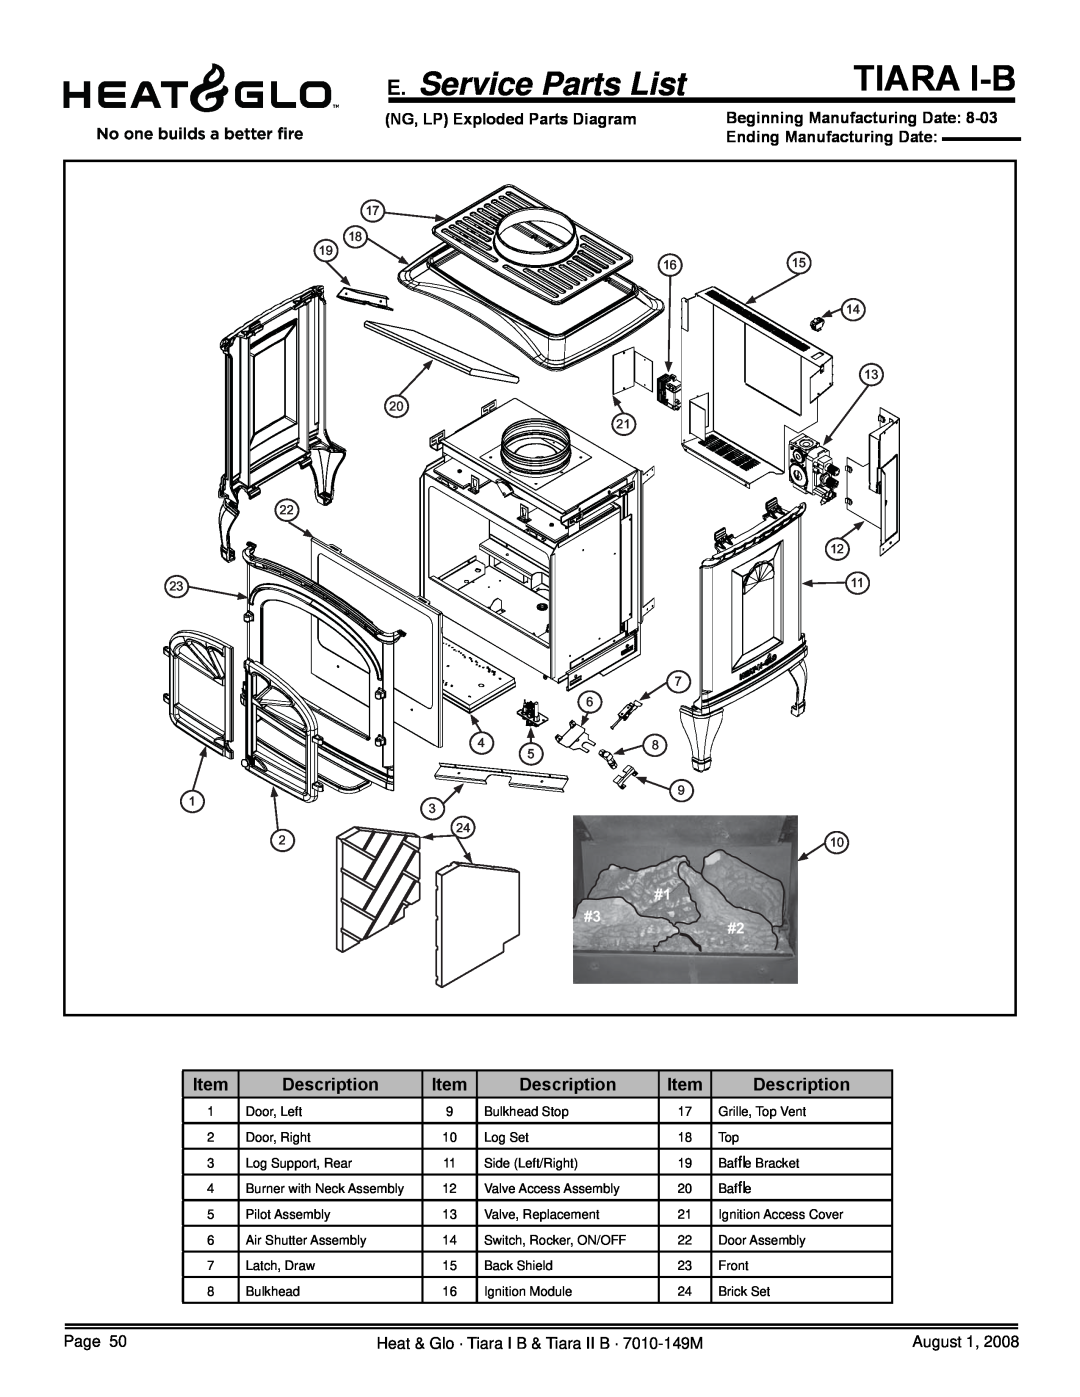 Hearth and Home Technologies TIARAI-BR-B Tiara I-B, E. Service Parts List, Description, NG, LP Exploded Parts Diagram 